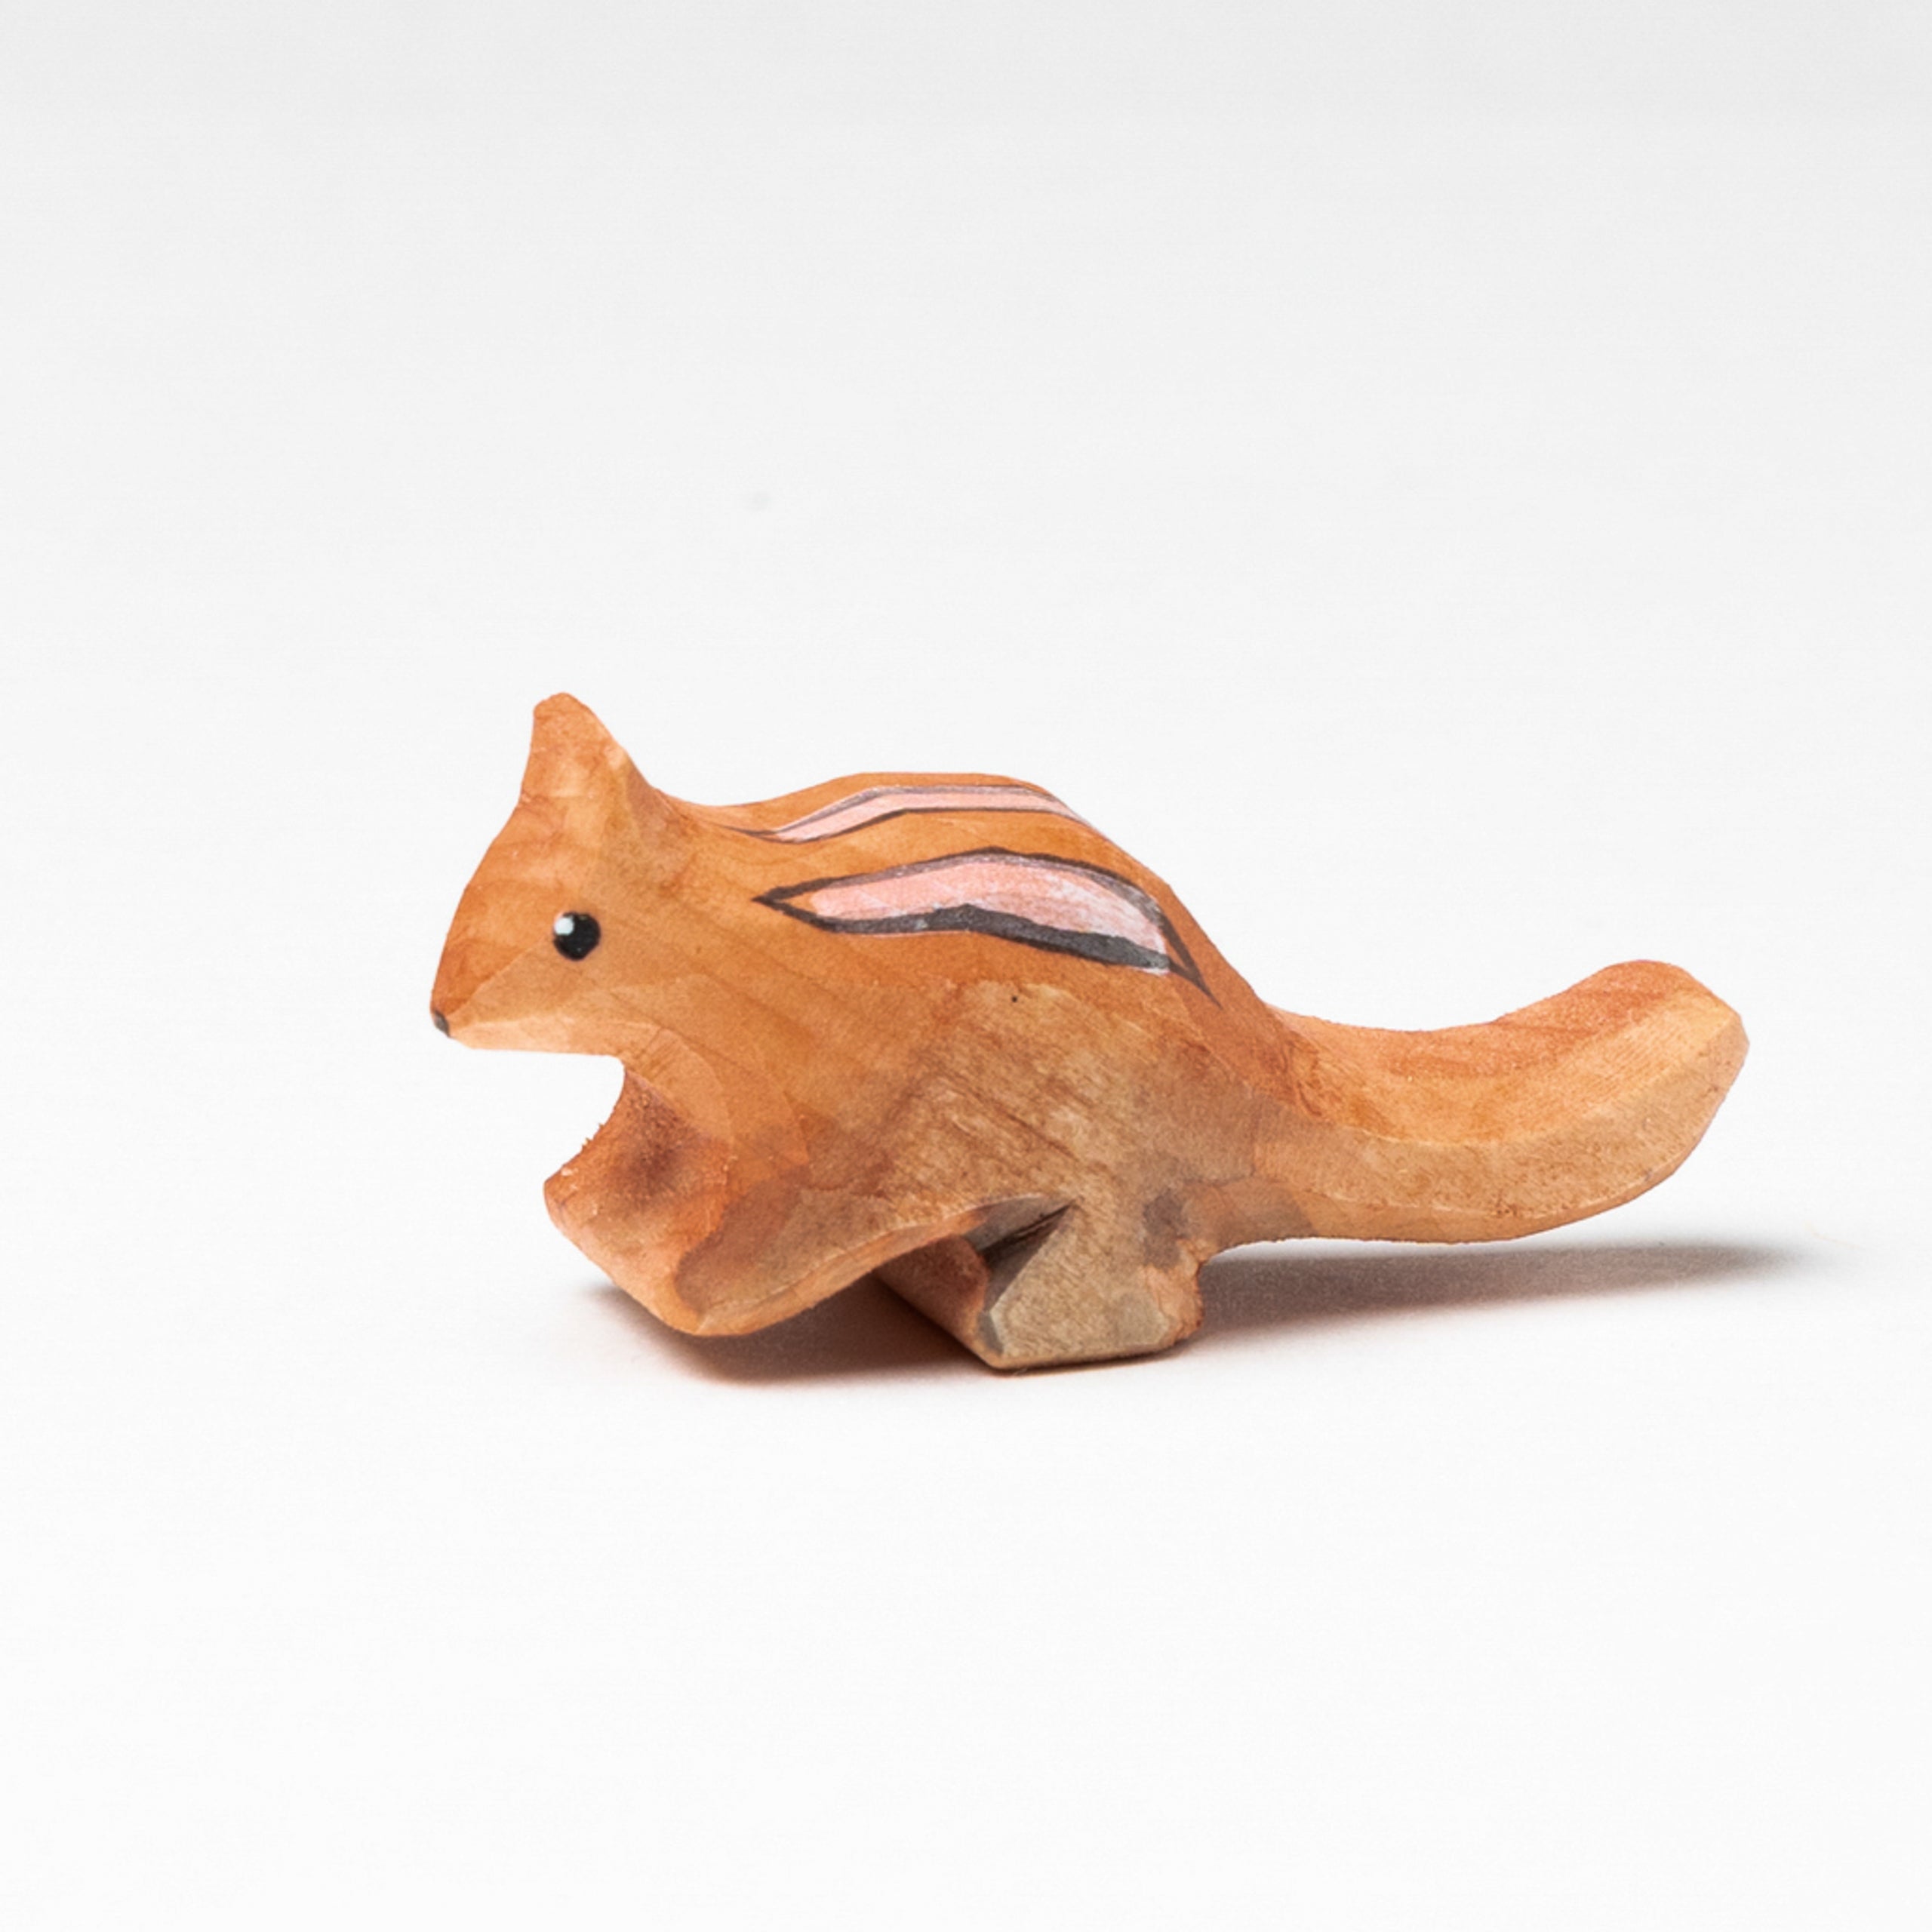 Wooden Forest Animals Toys Set (17 pcs) - WoodenCaterpillar Toys